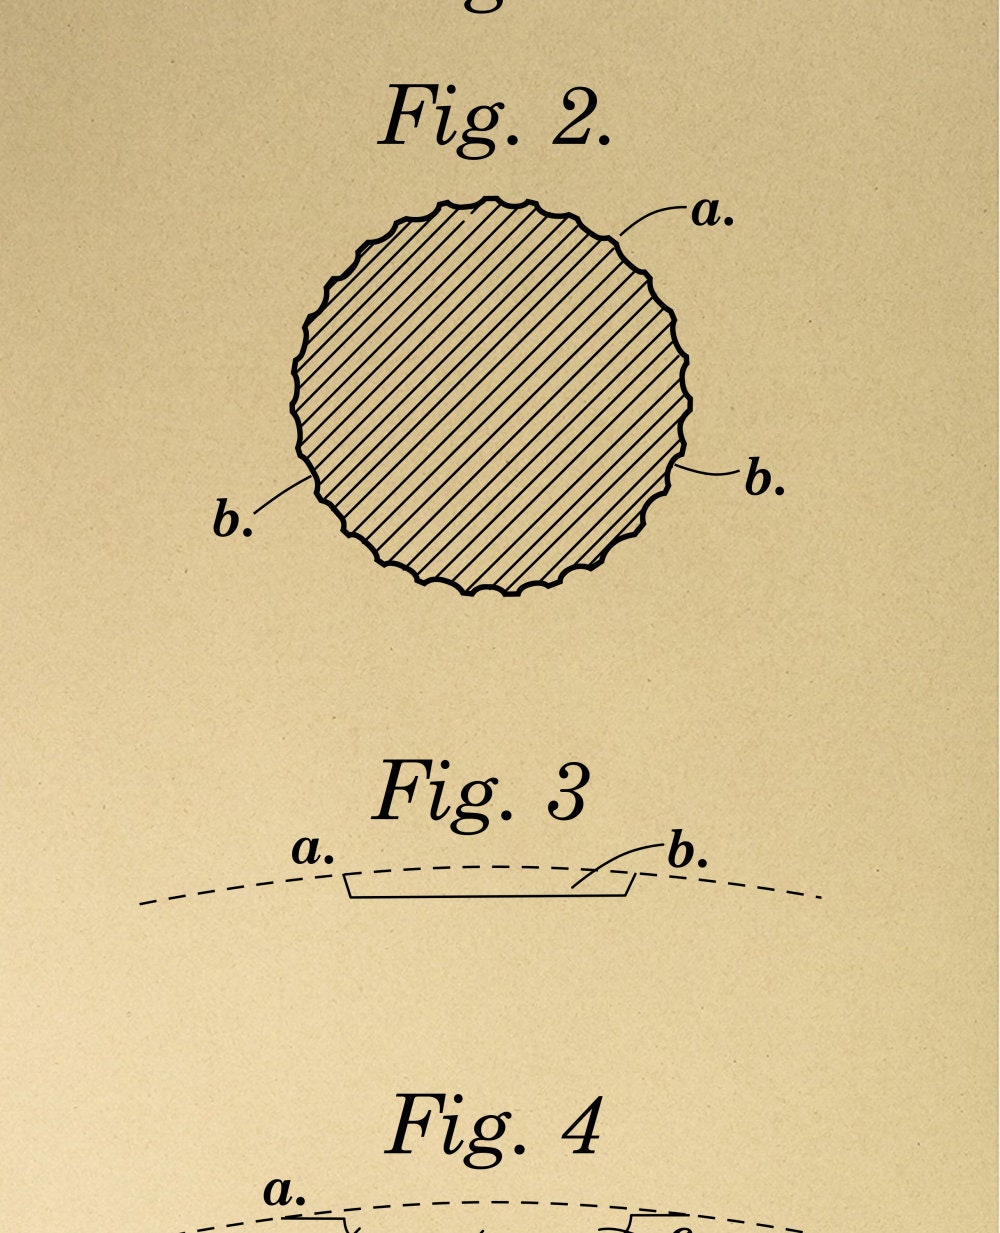 Golf Ball Patent Art Outline (Print)